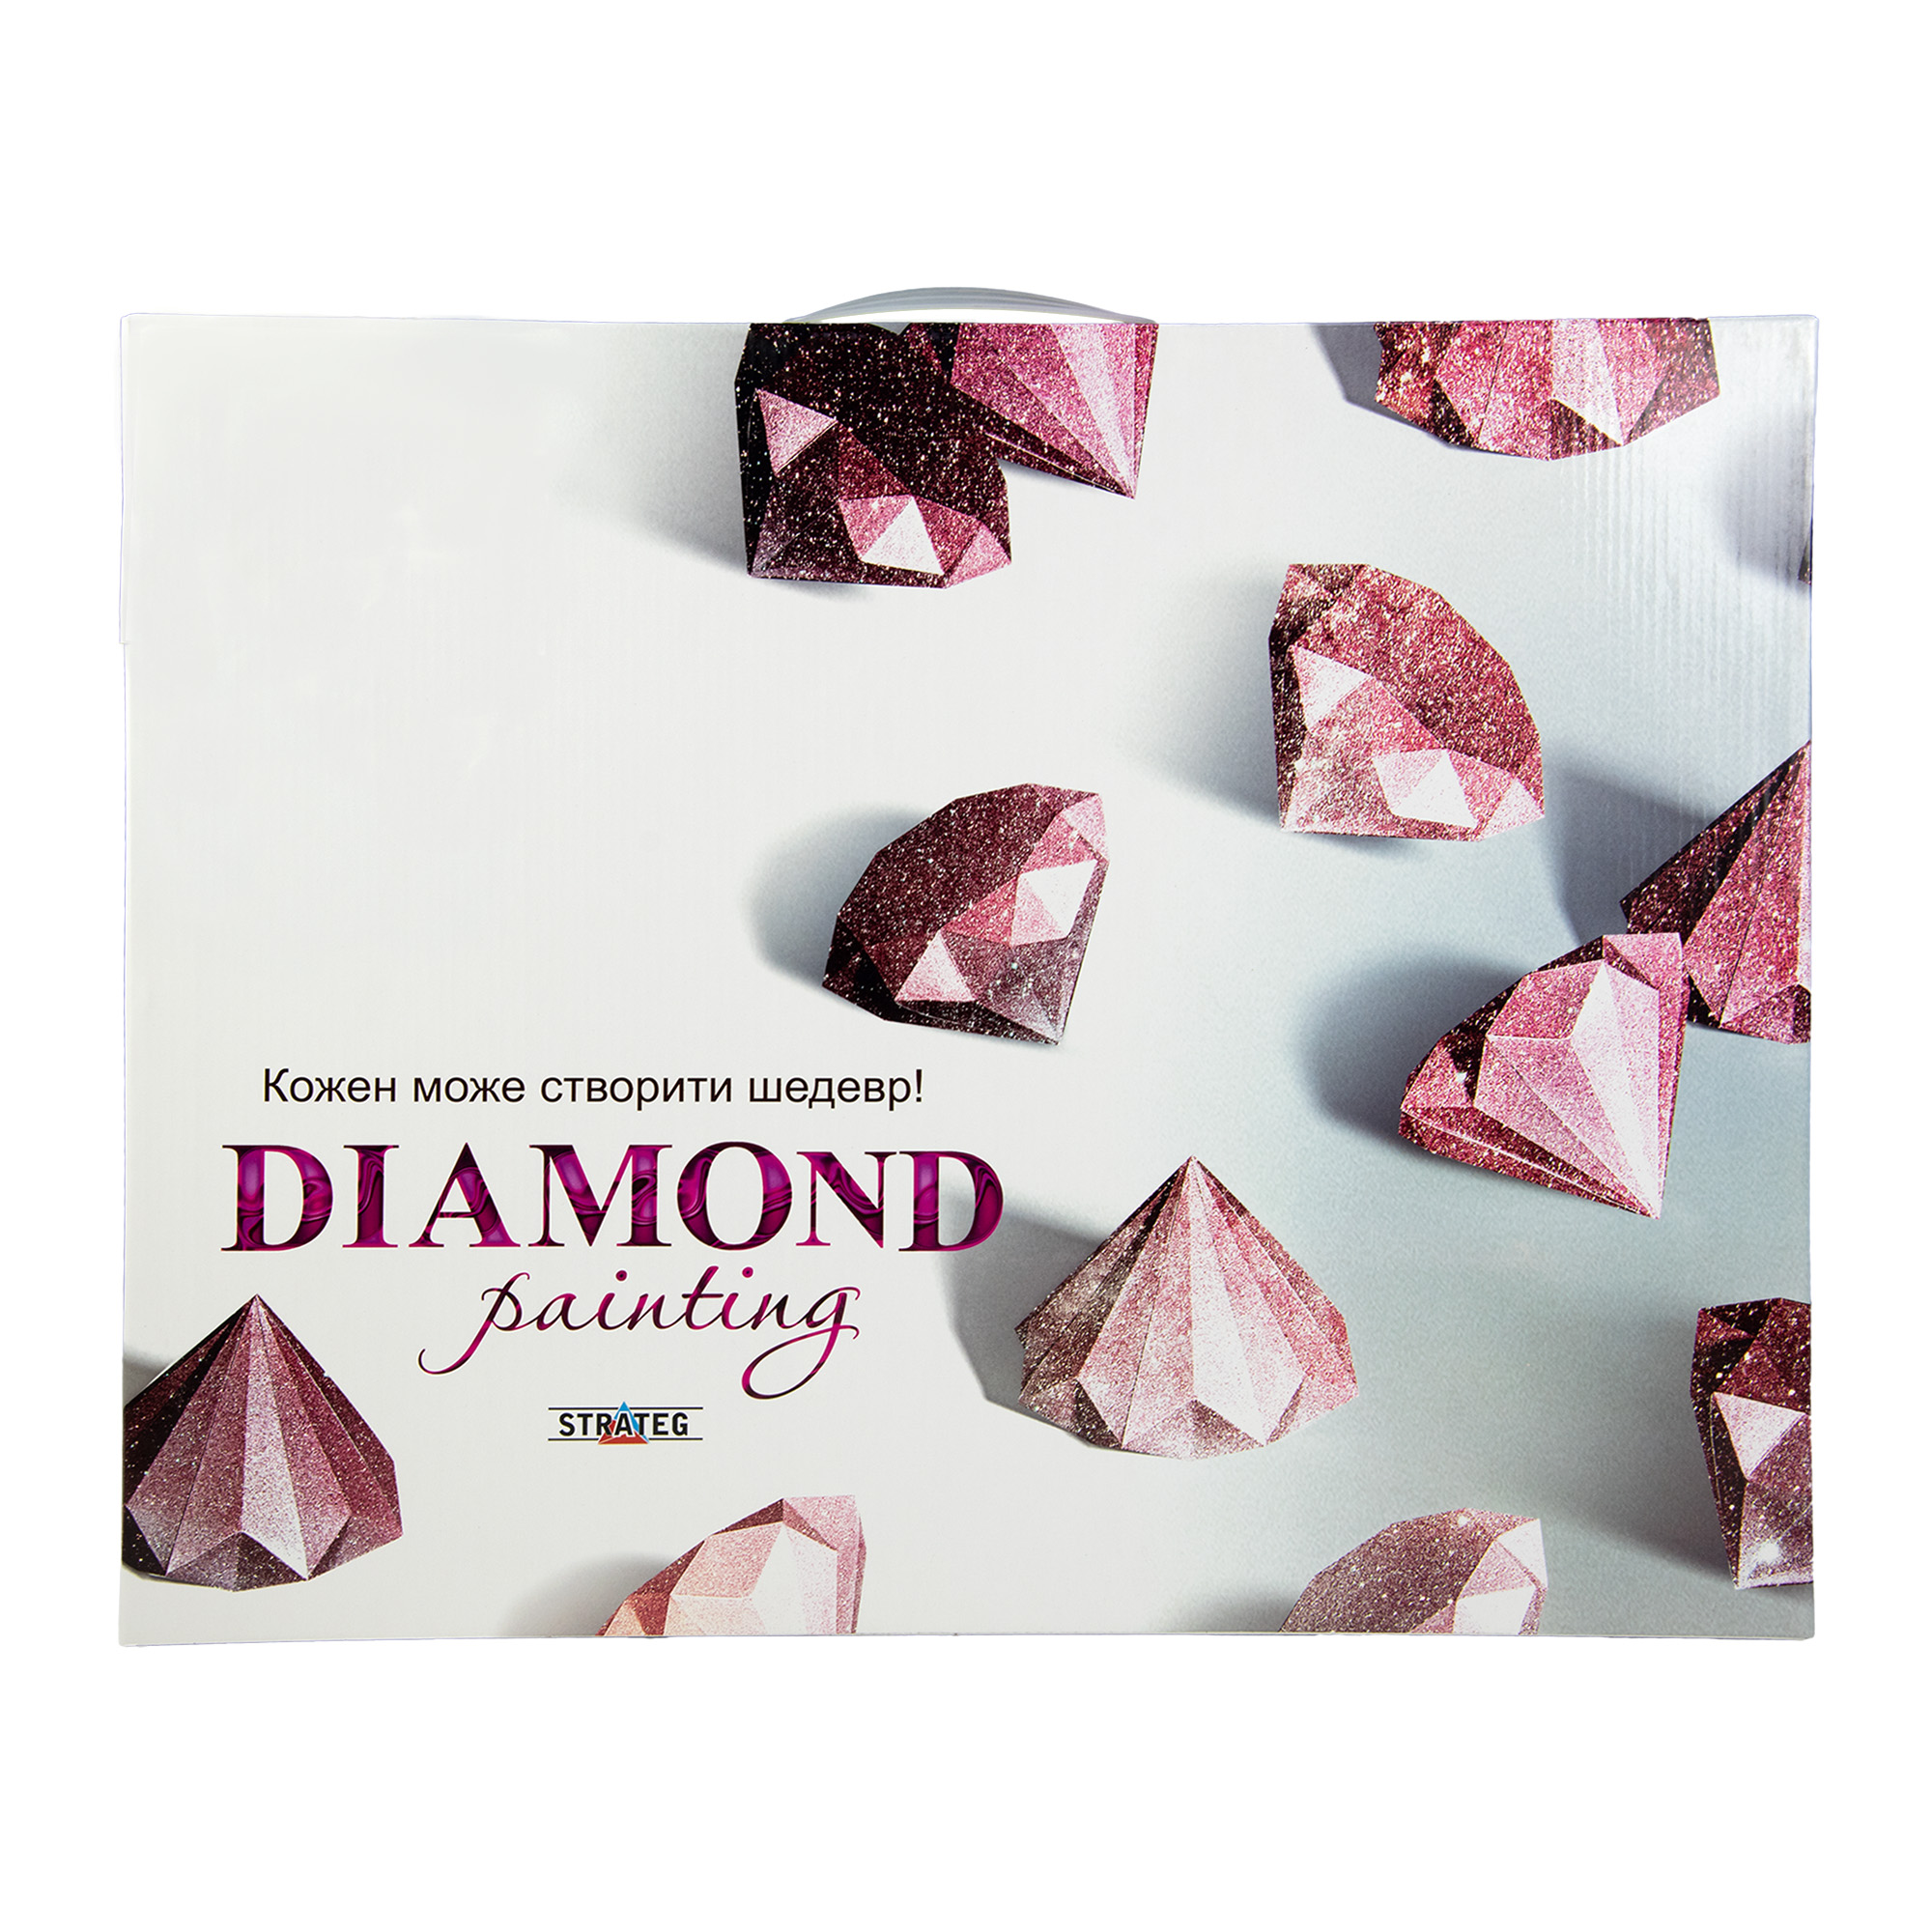 Diamantmosaik Strateg PREMIUM Durchbrochenes Mandala Größe 30x30 cm (ME13820)